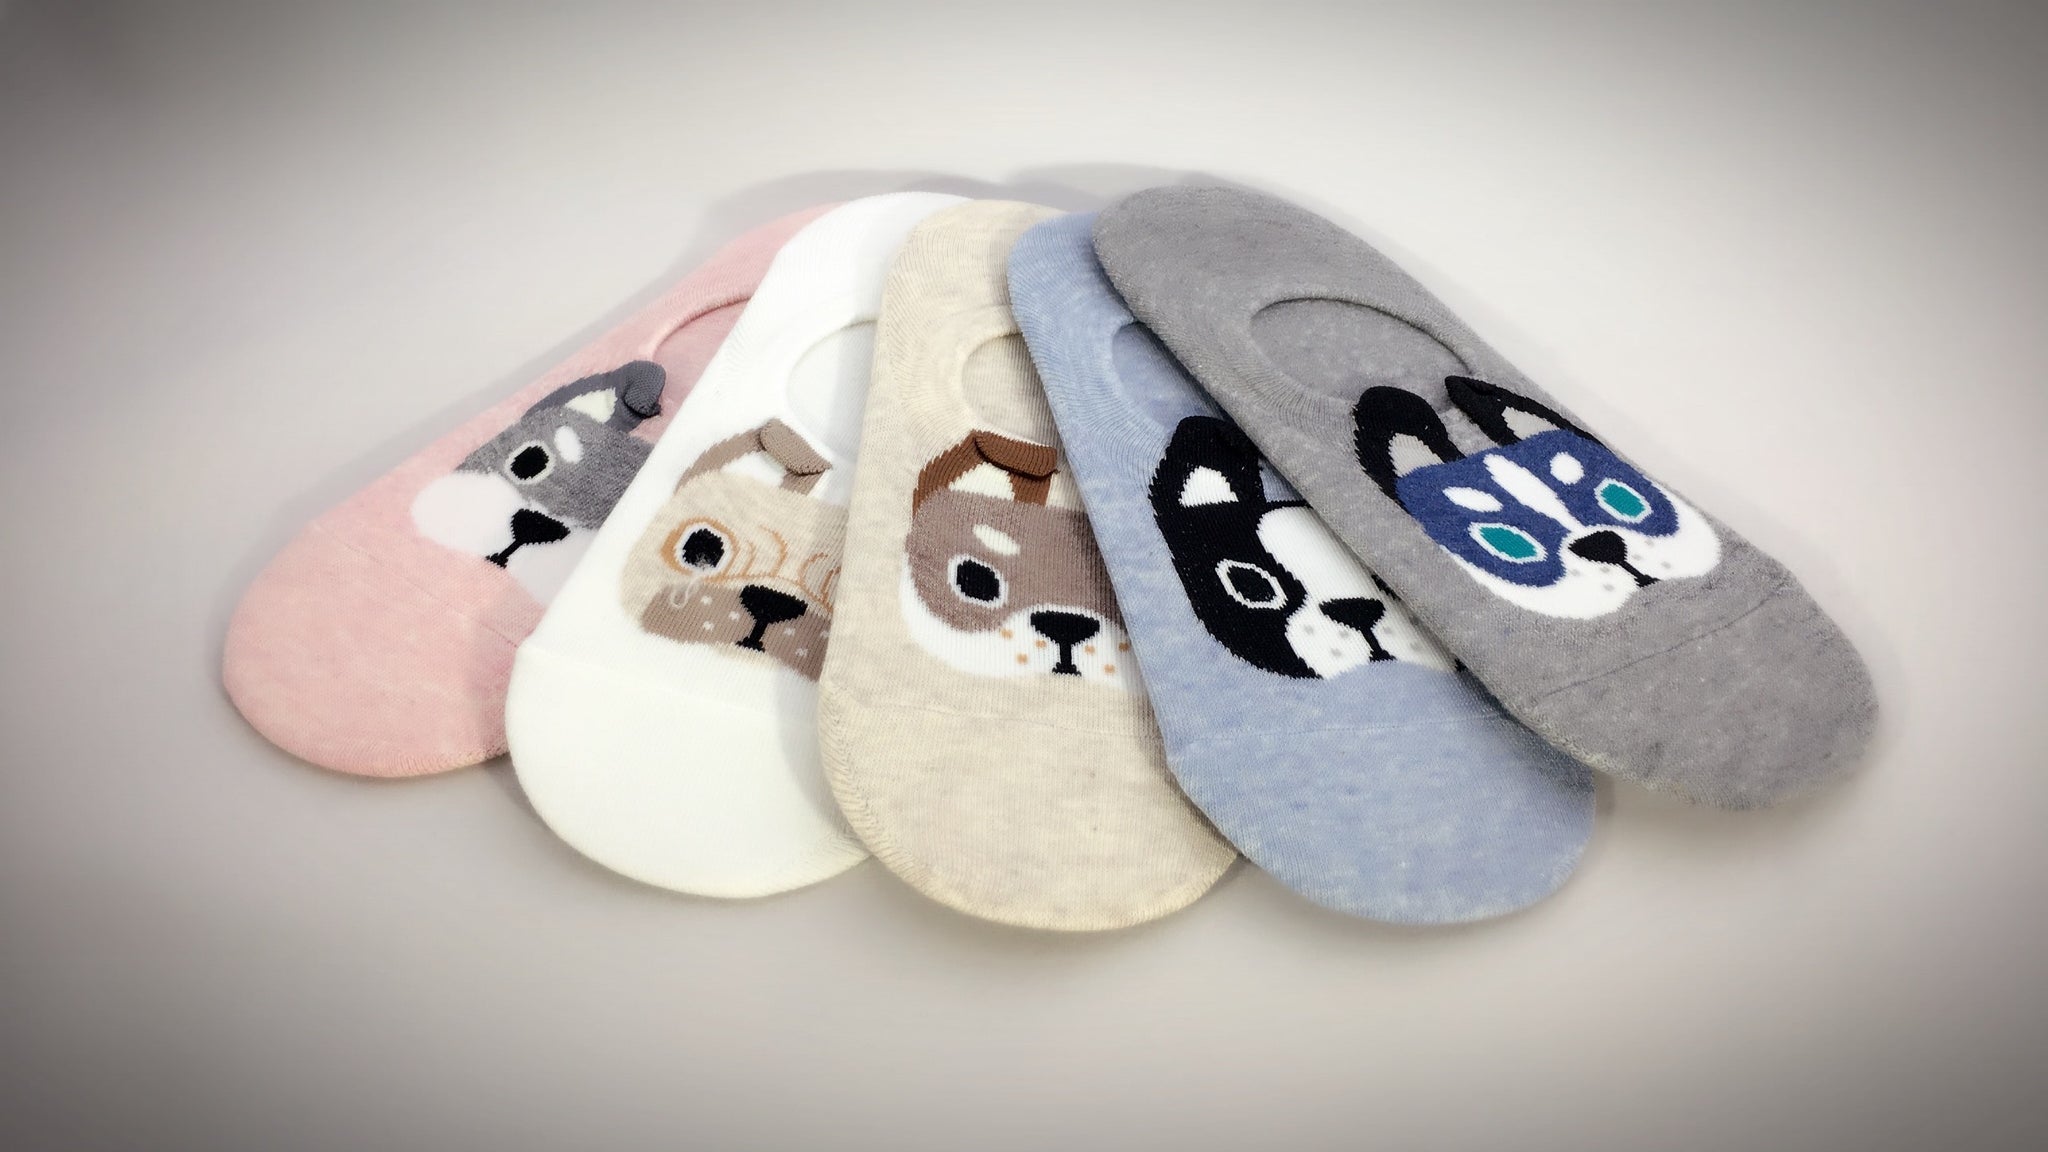 Cute socks, Fun, Quality Korean socks, Dog print No Show socks – GotYourToes